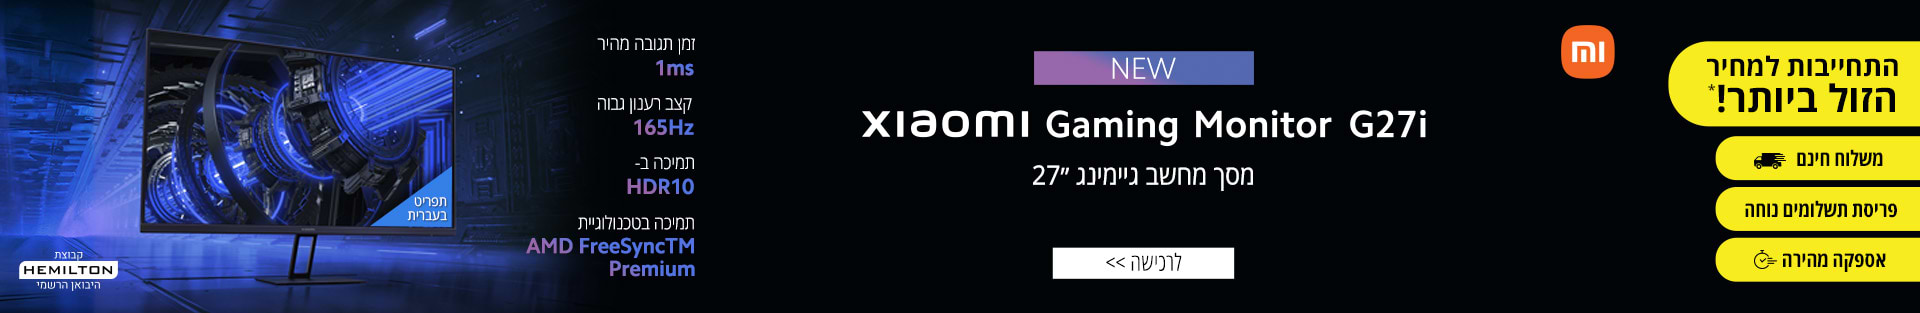 NEW xiaom Gaming Monitor G27i מסך מחשב גיימינג 27